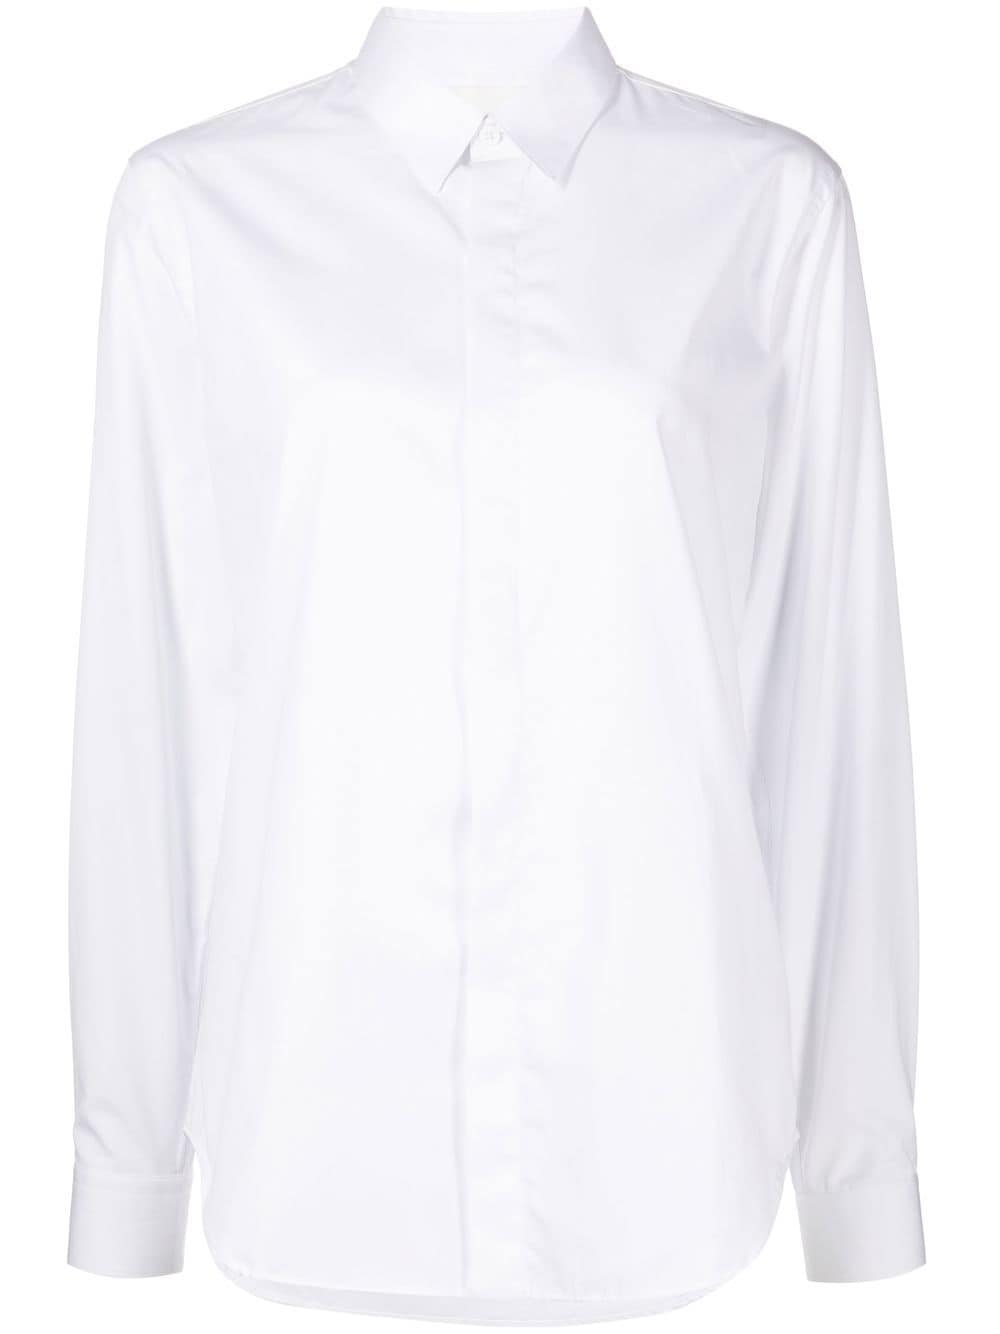 Dion Lee Signature Eyelet cotton shirt - White